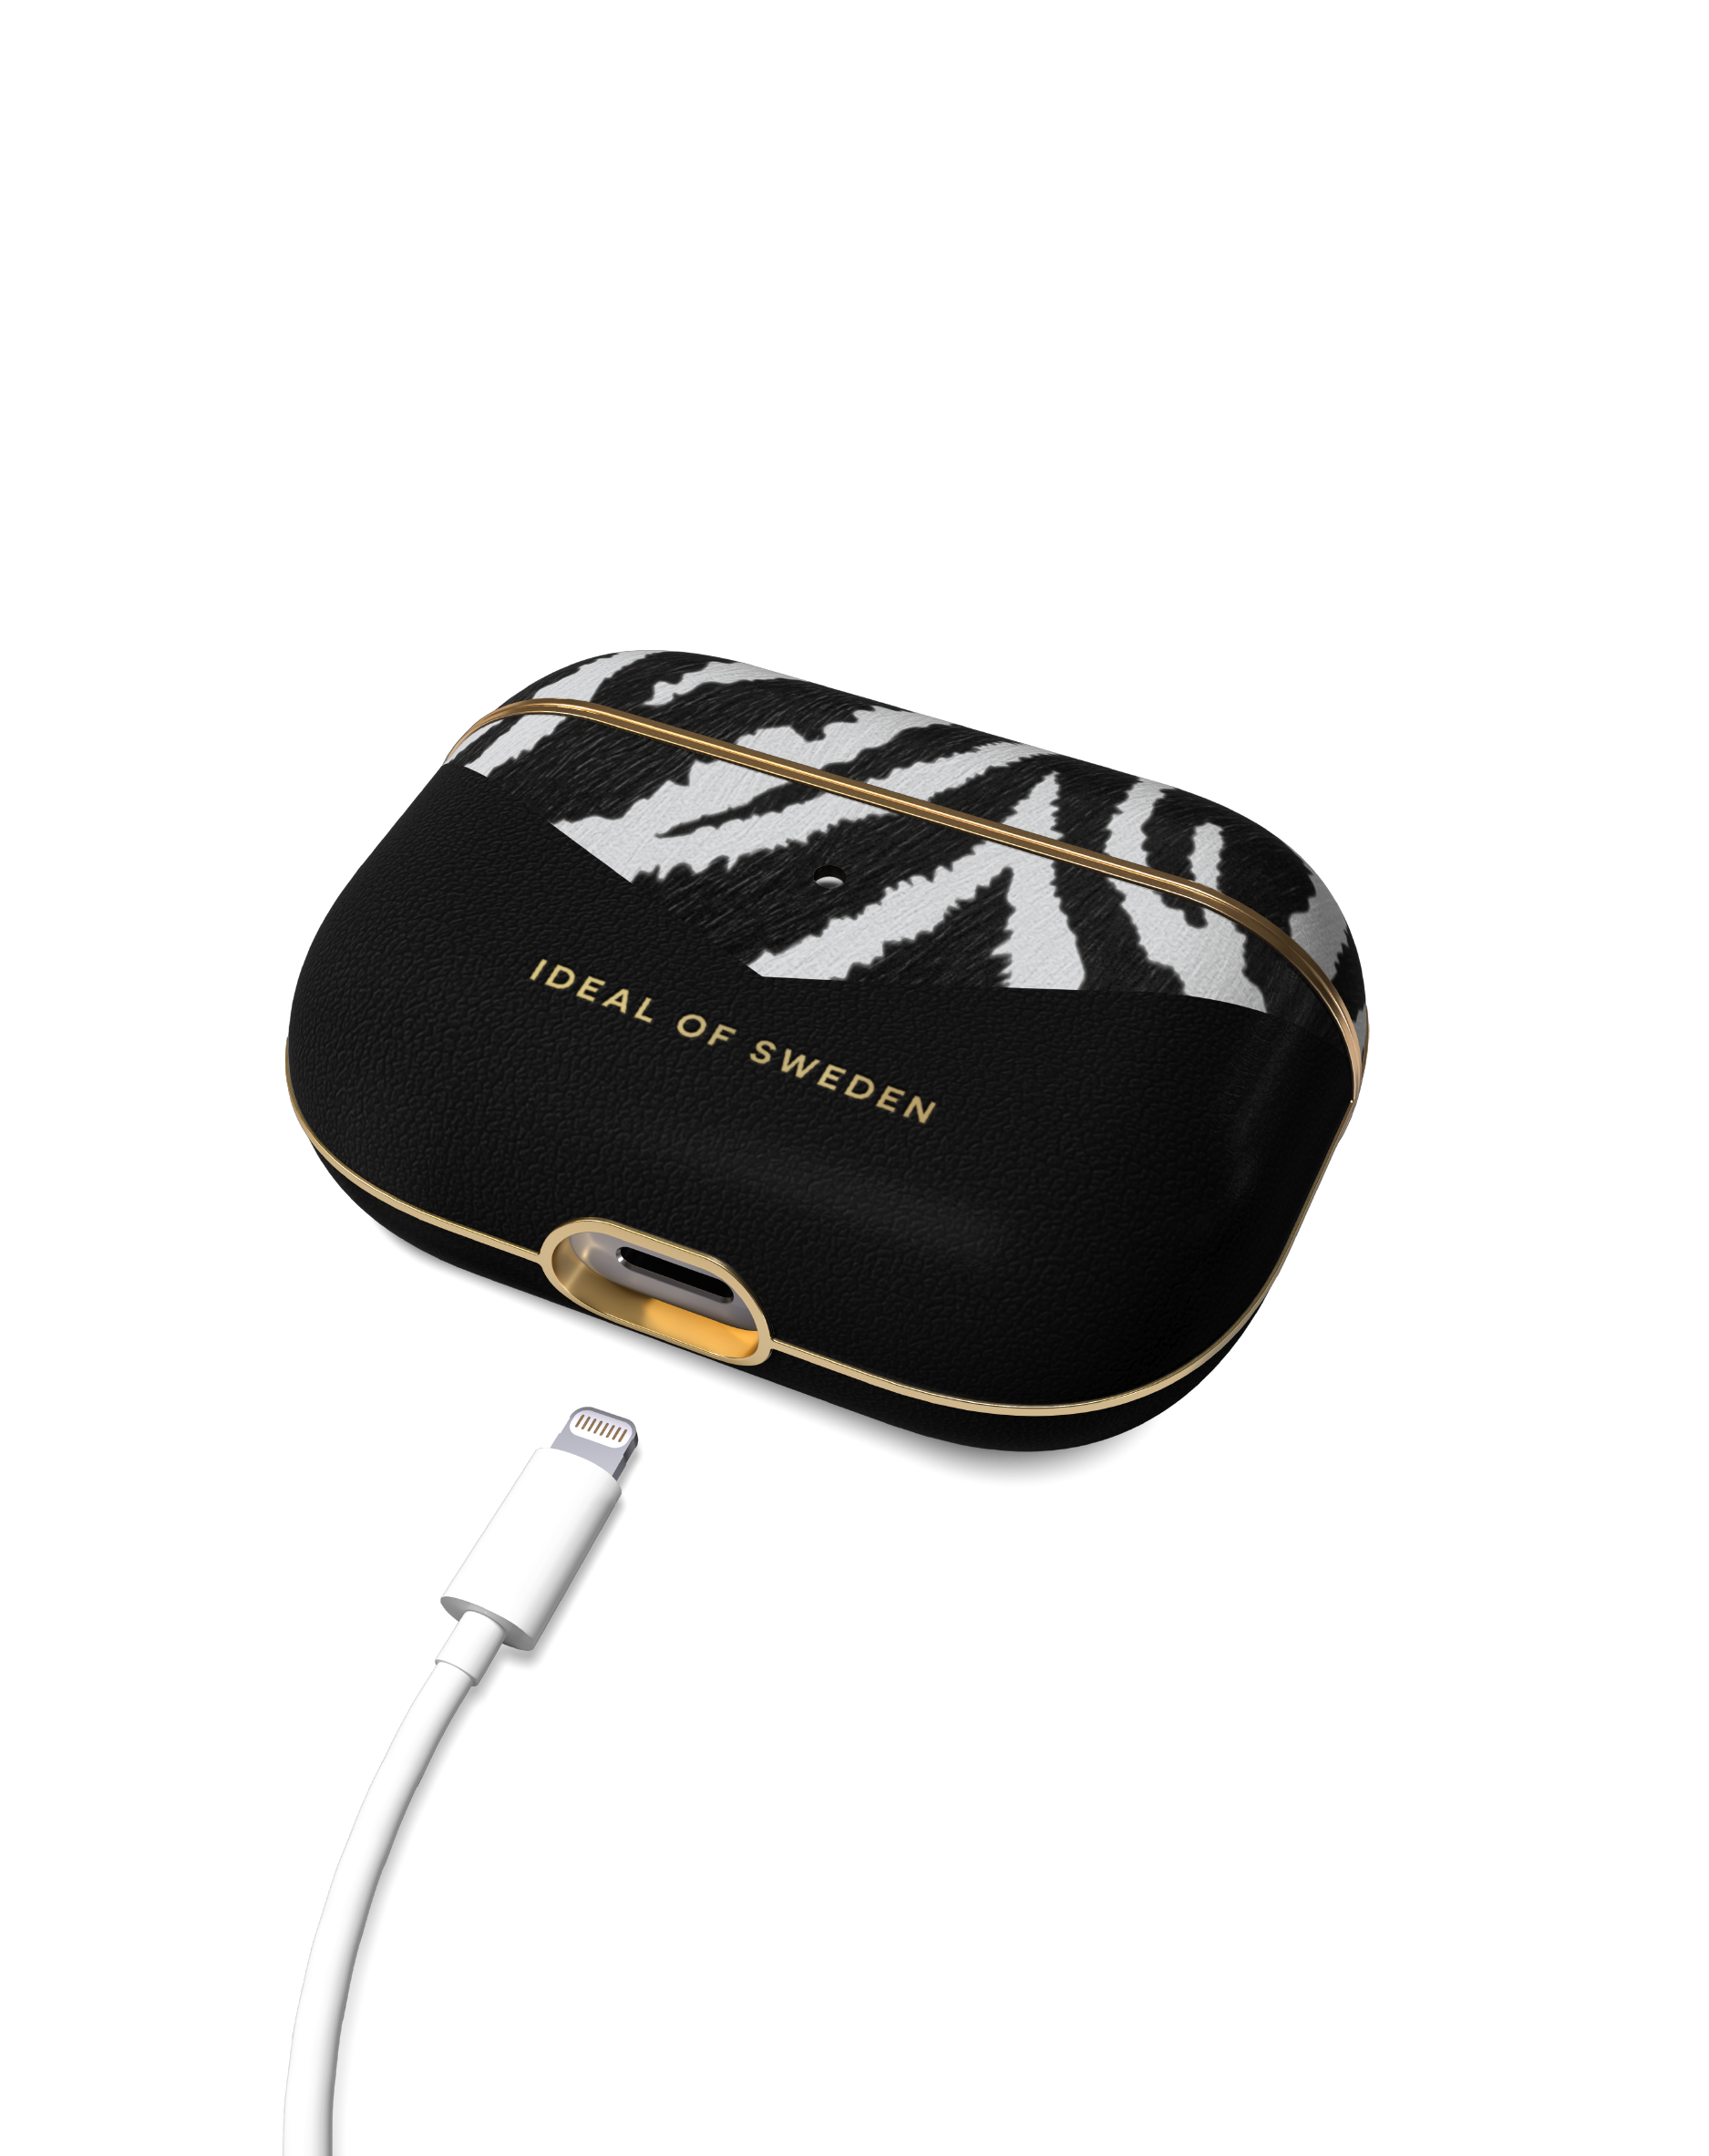 Full Zebra SWEDEN Case IDFAPC-PRO-247 AirPod passend für: Cover Eclipse IDEAL OF Apple